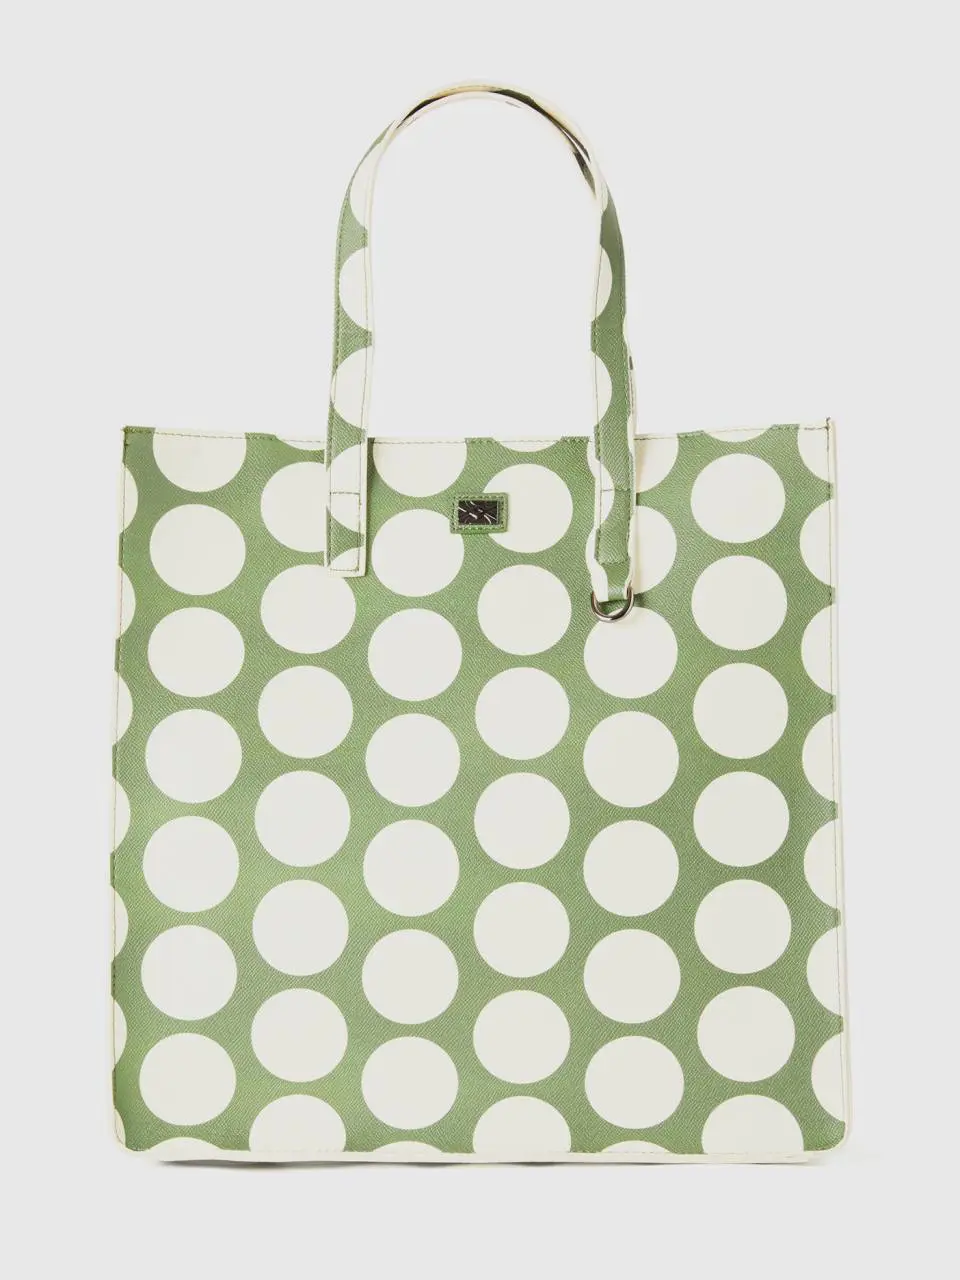 Benetton green shopping bag with white polka dots. 1